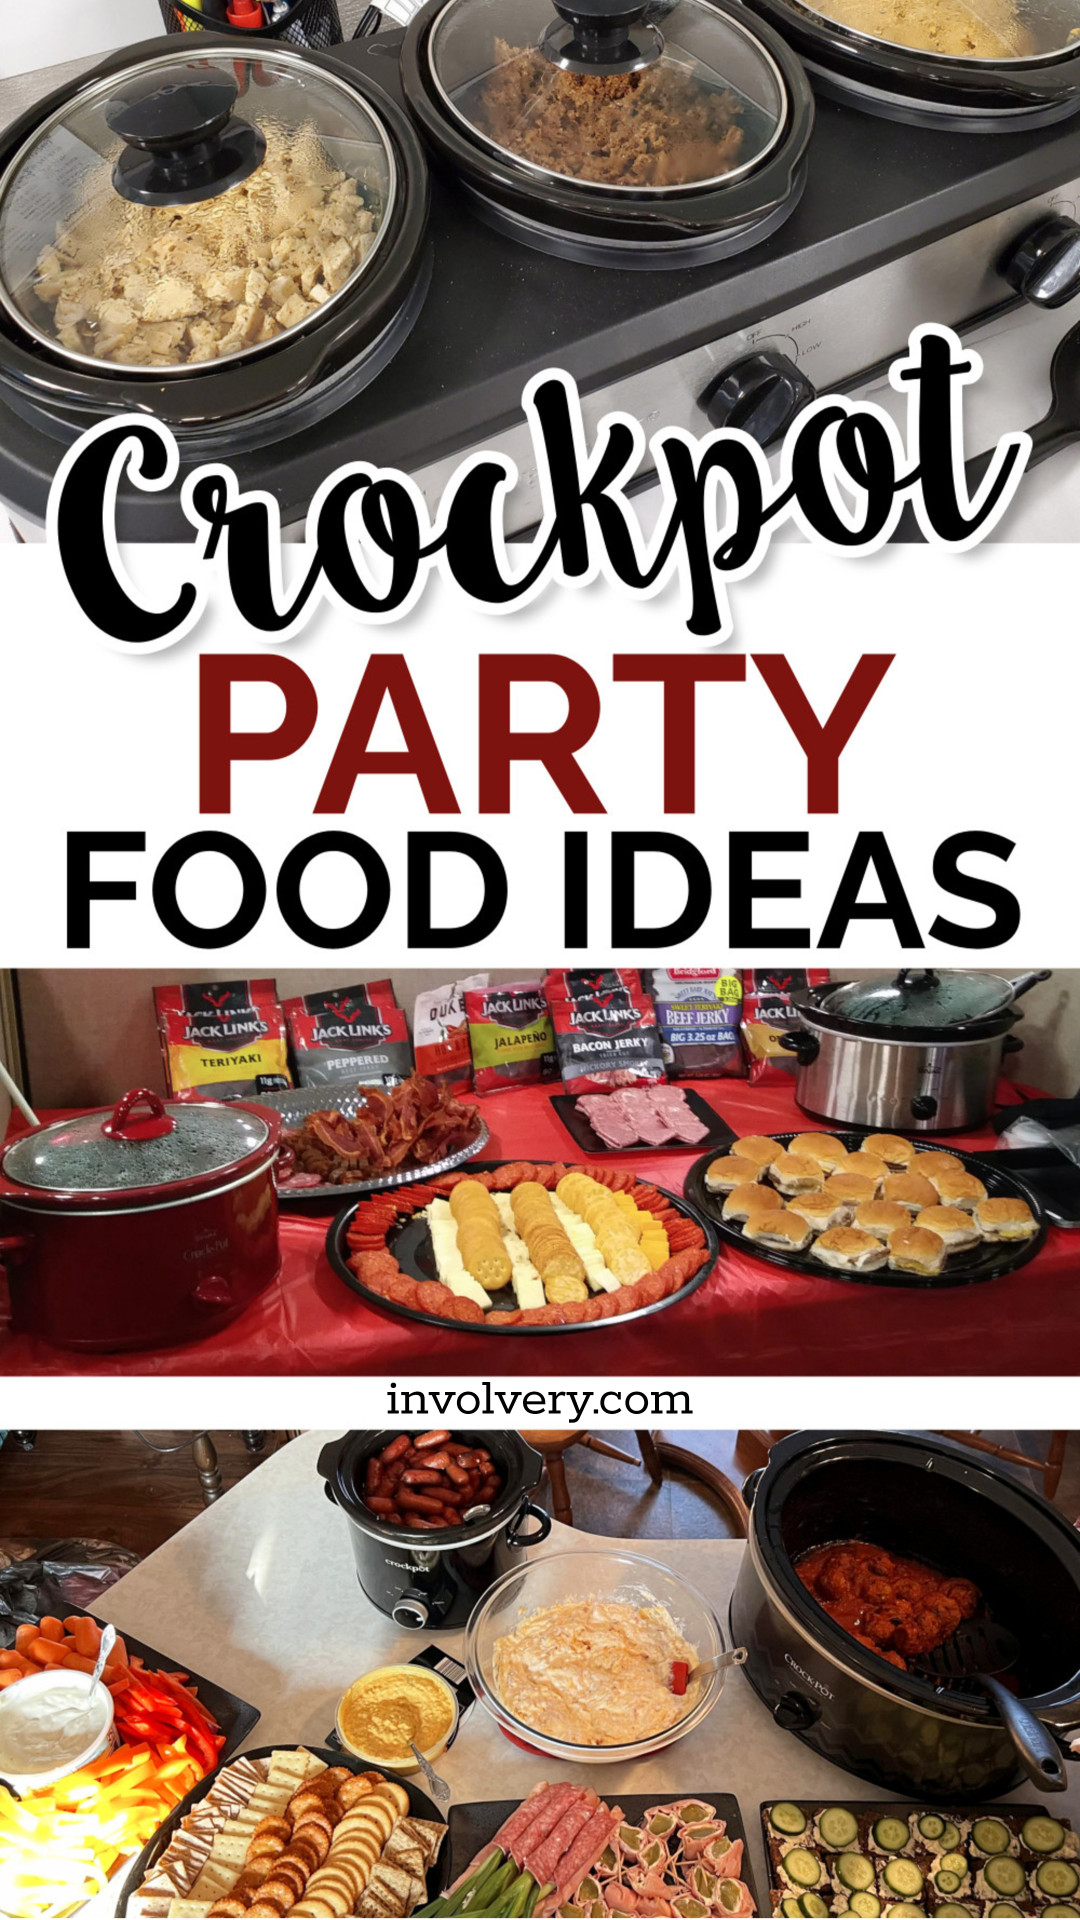 Crockpot party food ideas